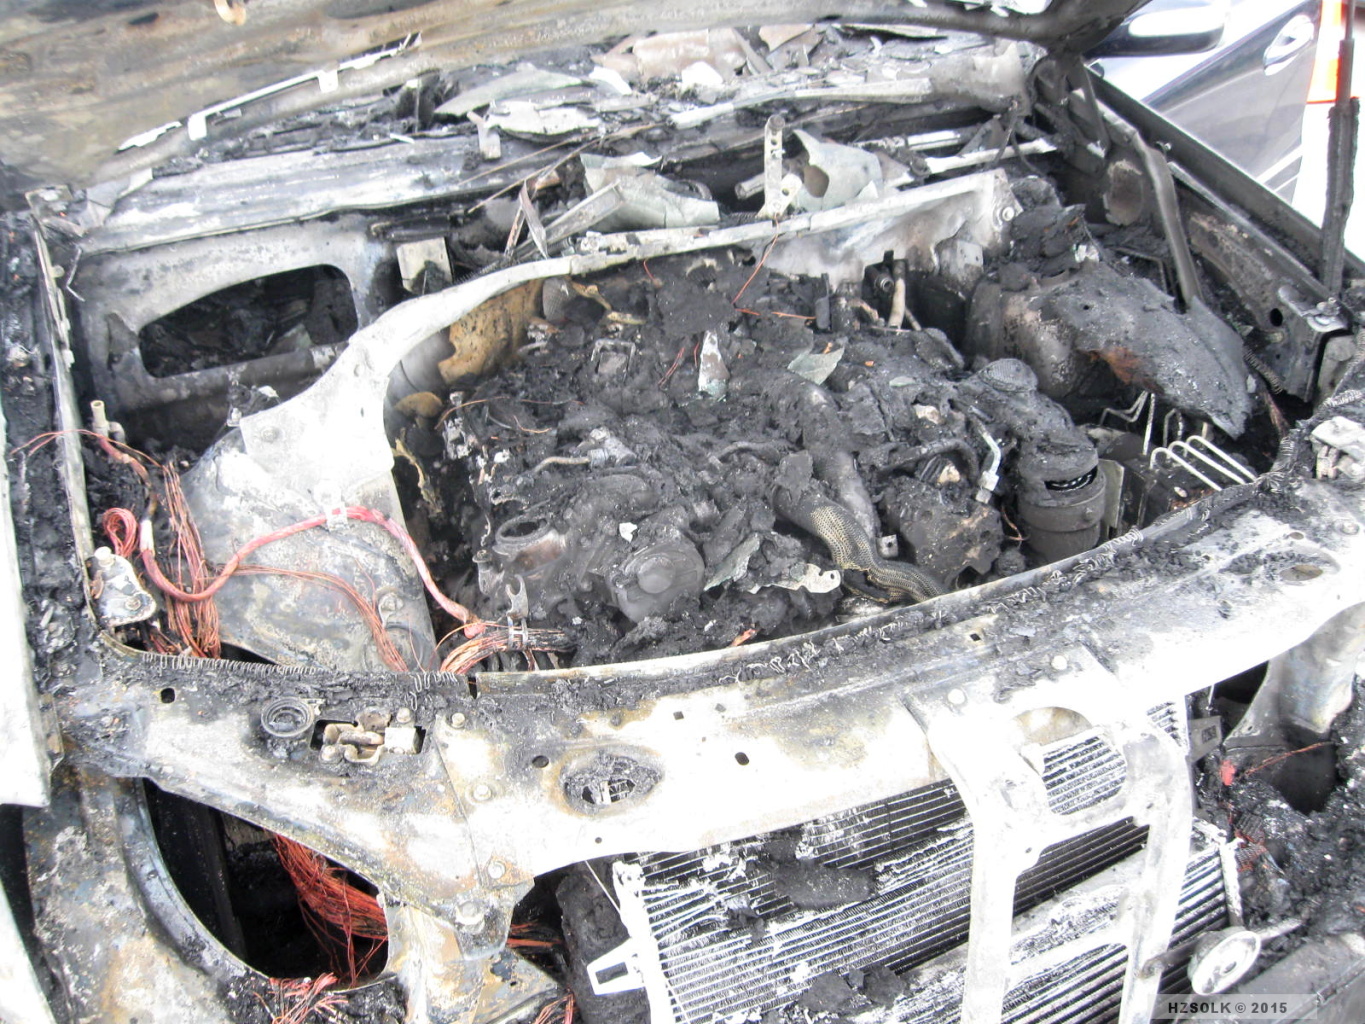 5 14-7-2015 P_DP_Požár osobní vozidla (5).JPG